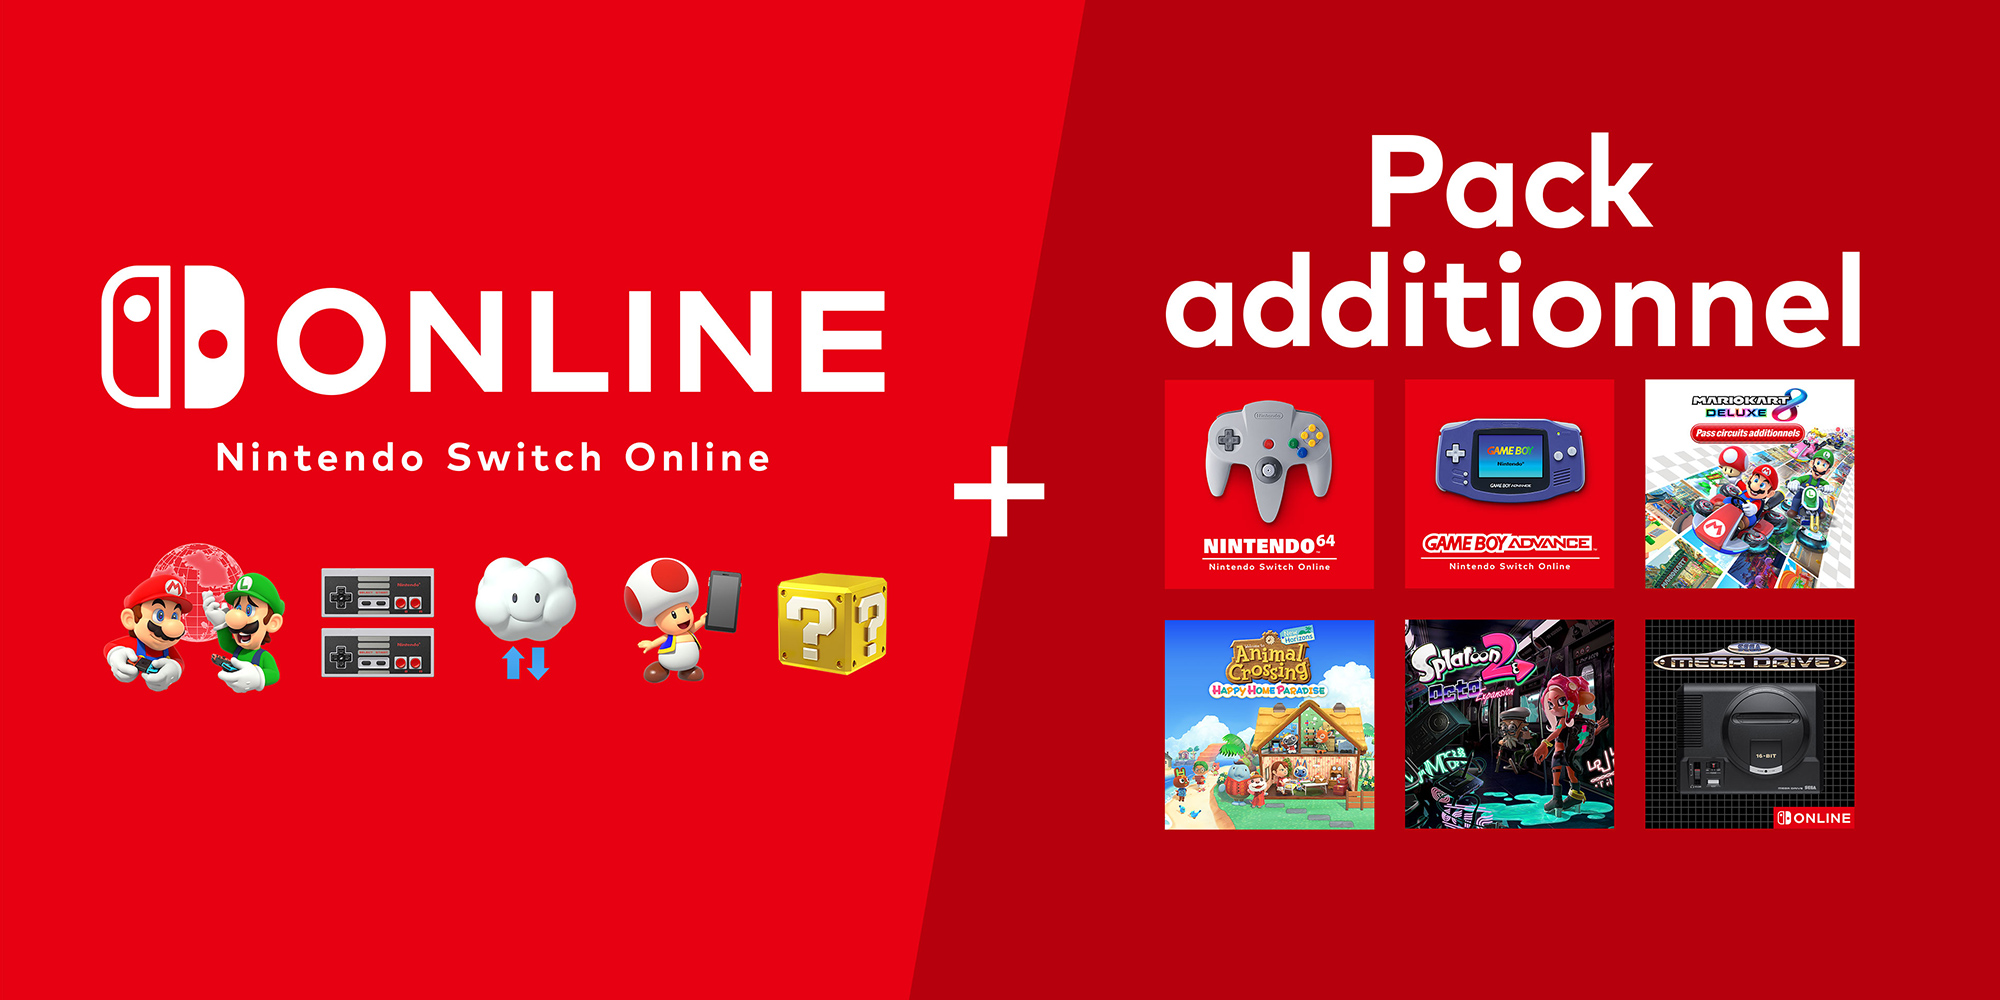 Nintendo Switch Online + Pack additionnel Nintendo Switch Online